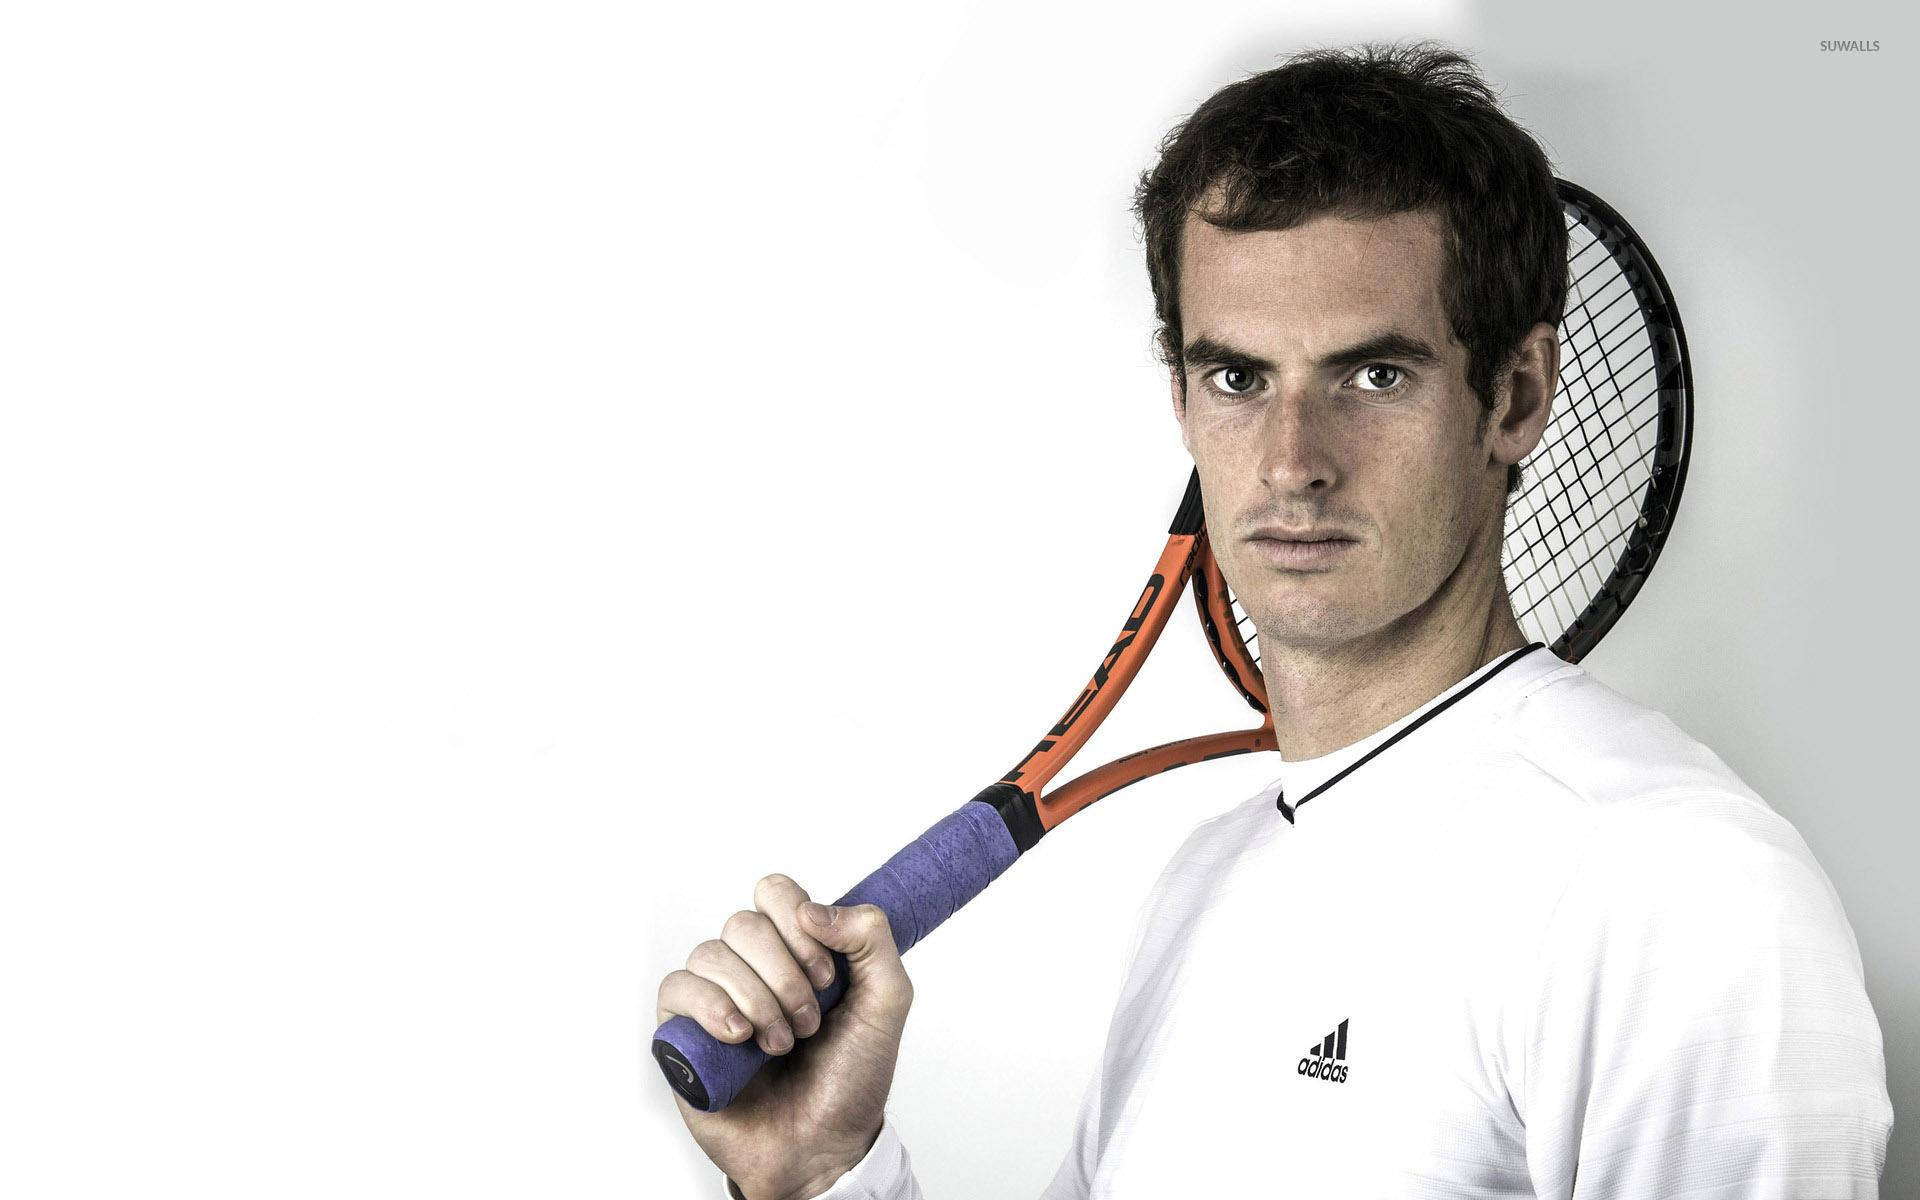 Andy Murray Racket Over Shoulder Wallpaper